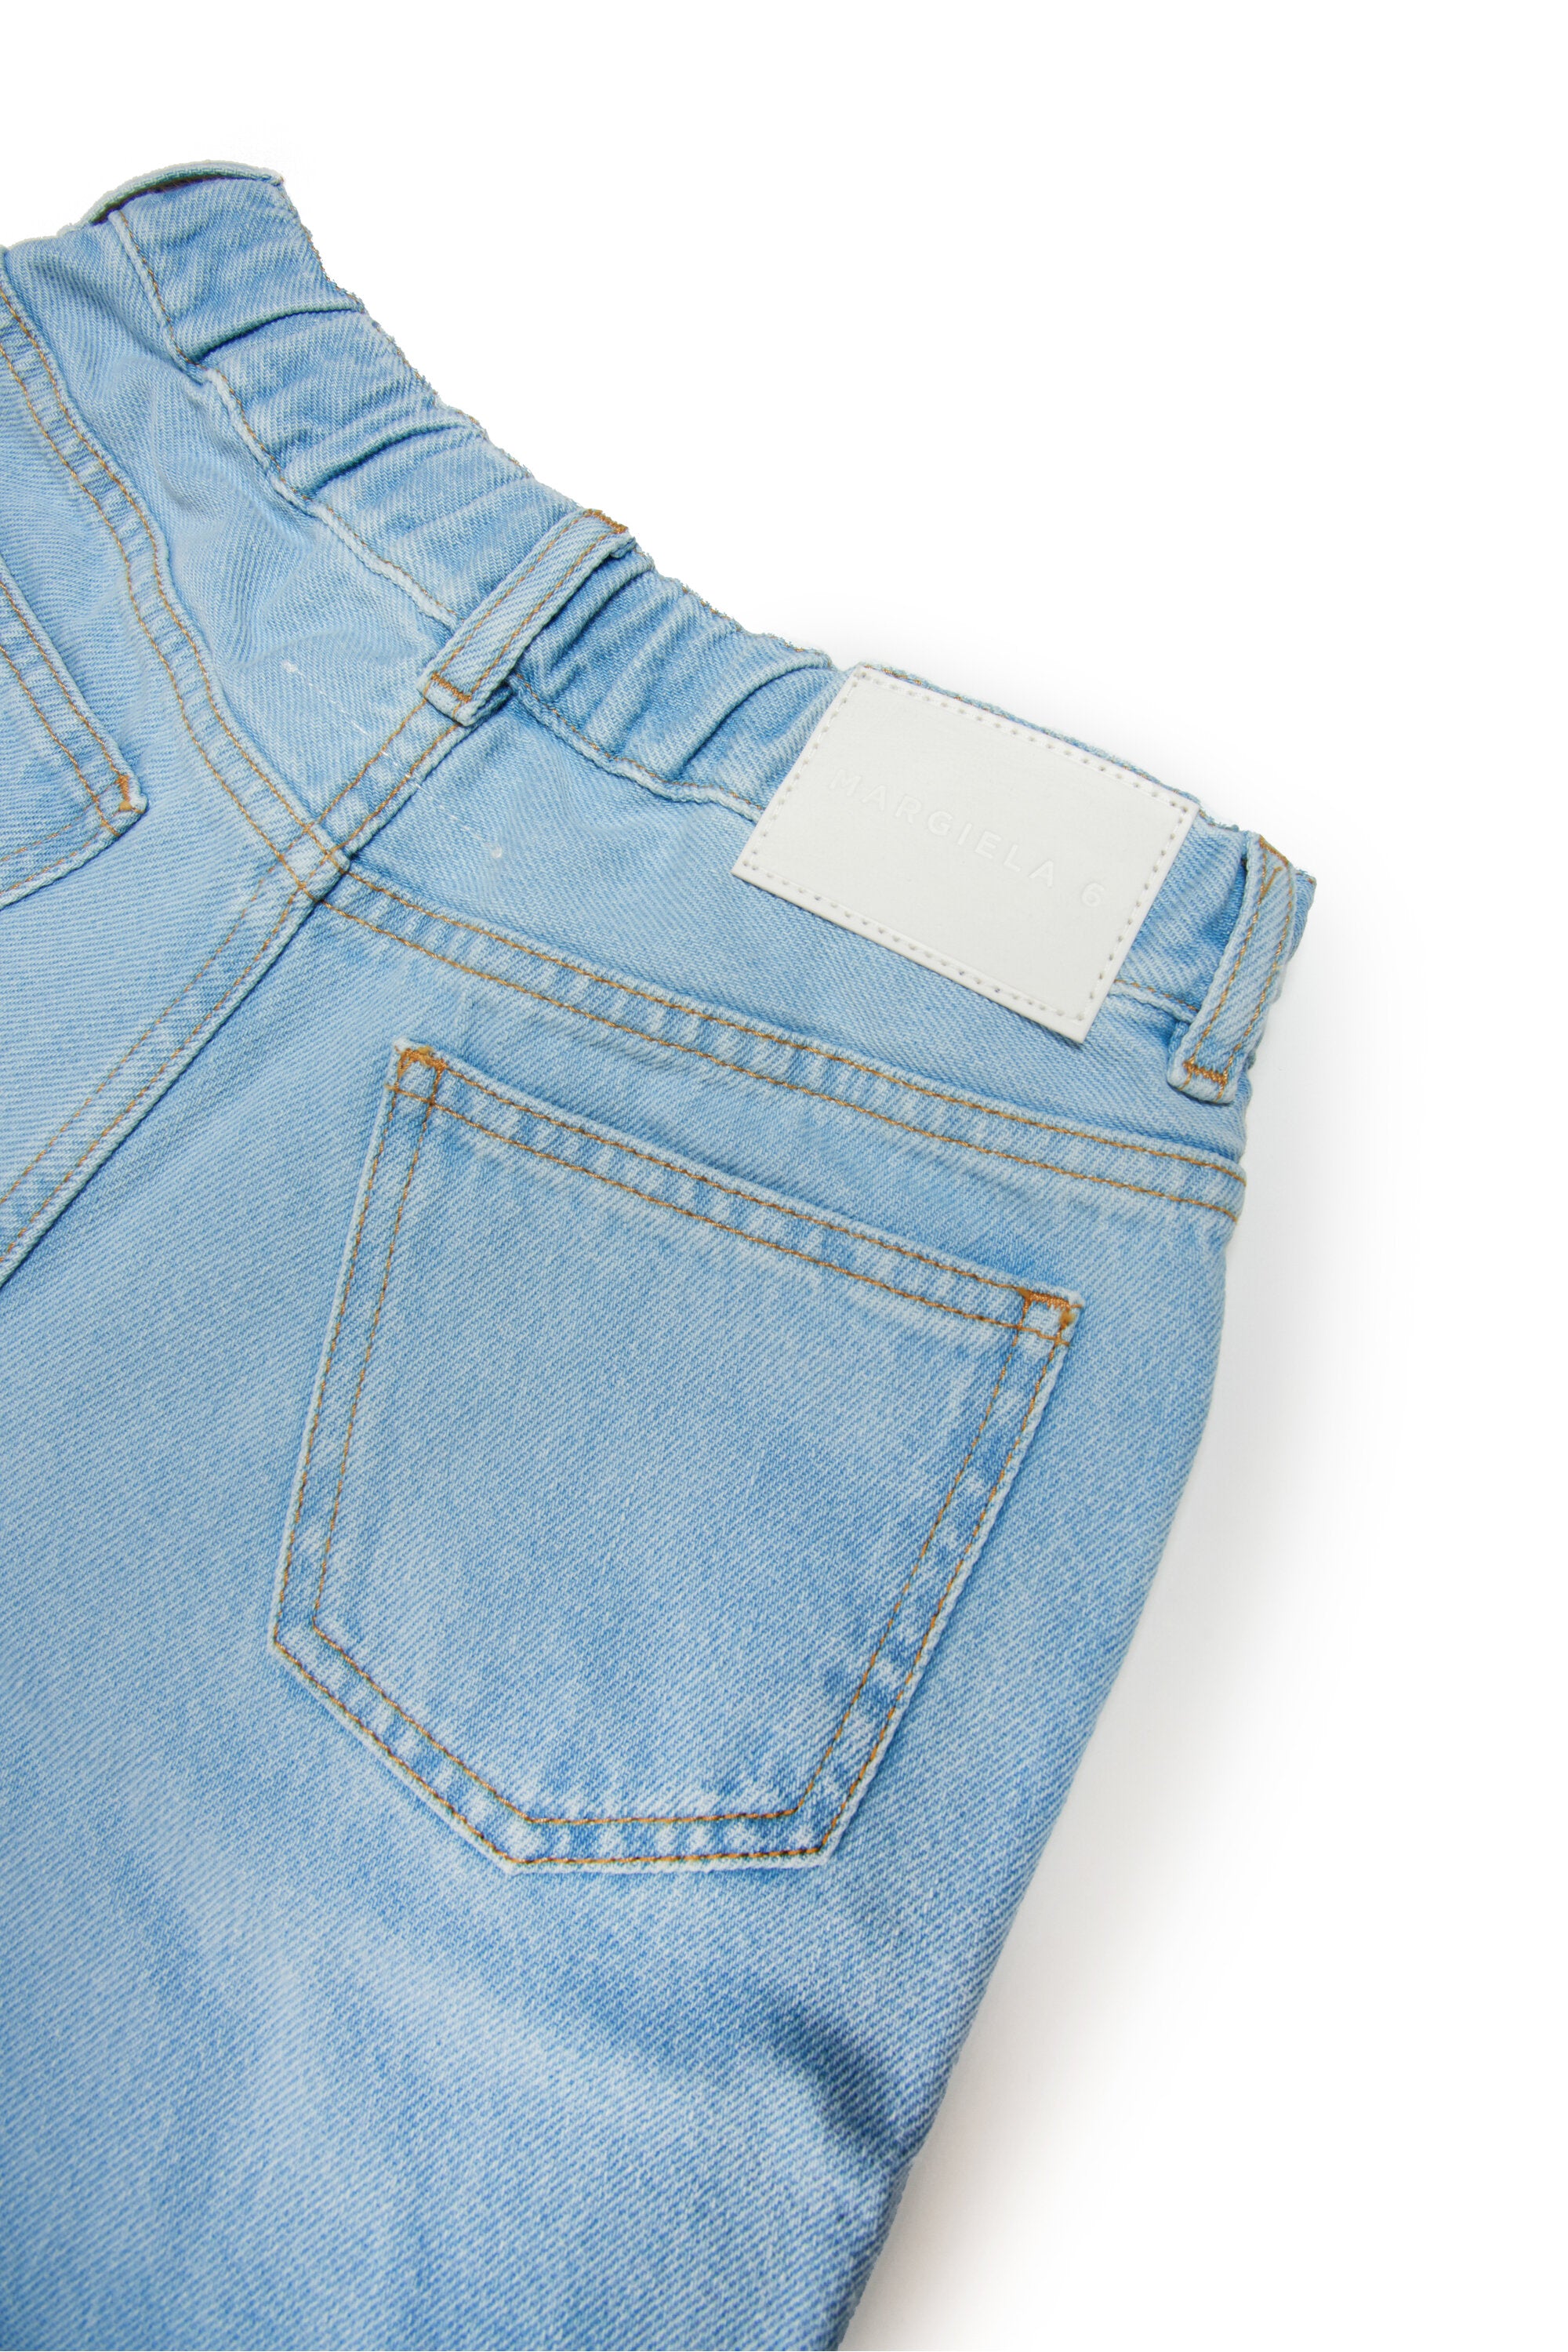 Blue faded denim shorts